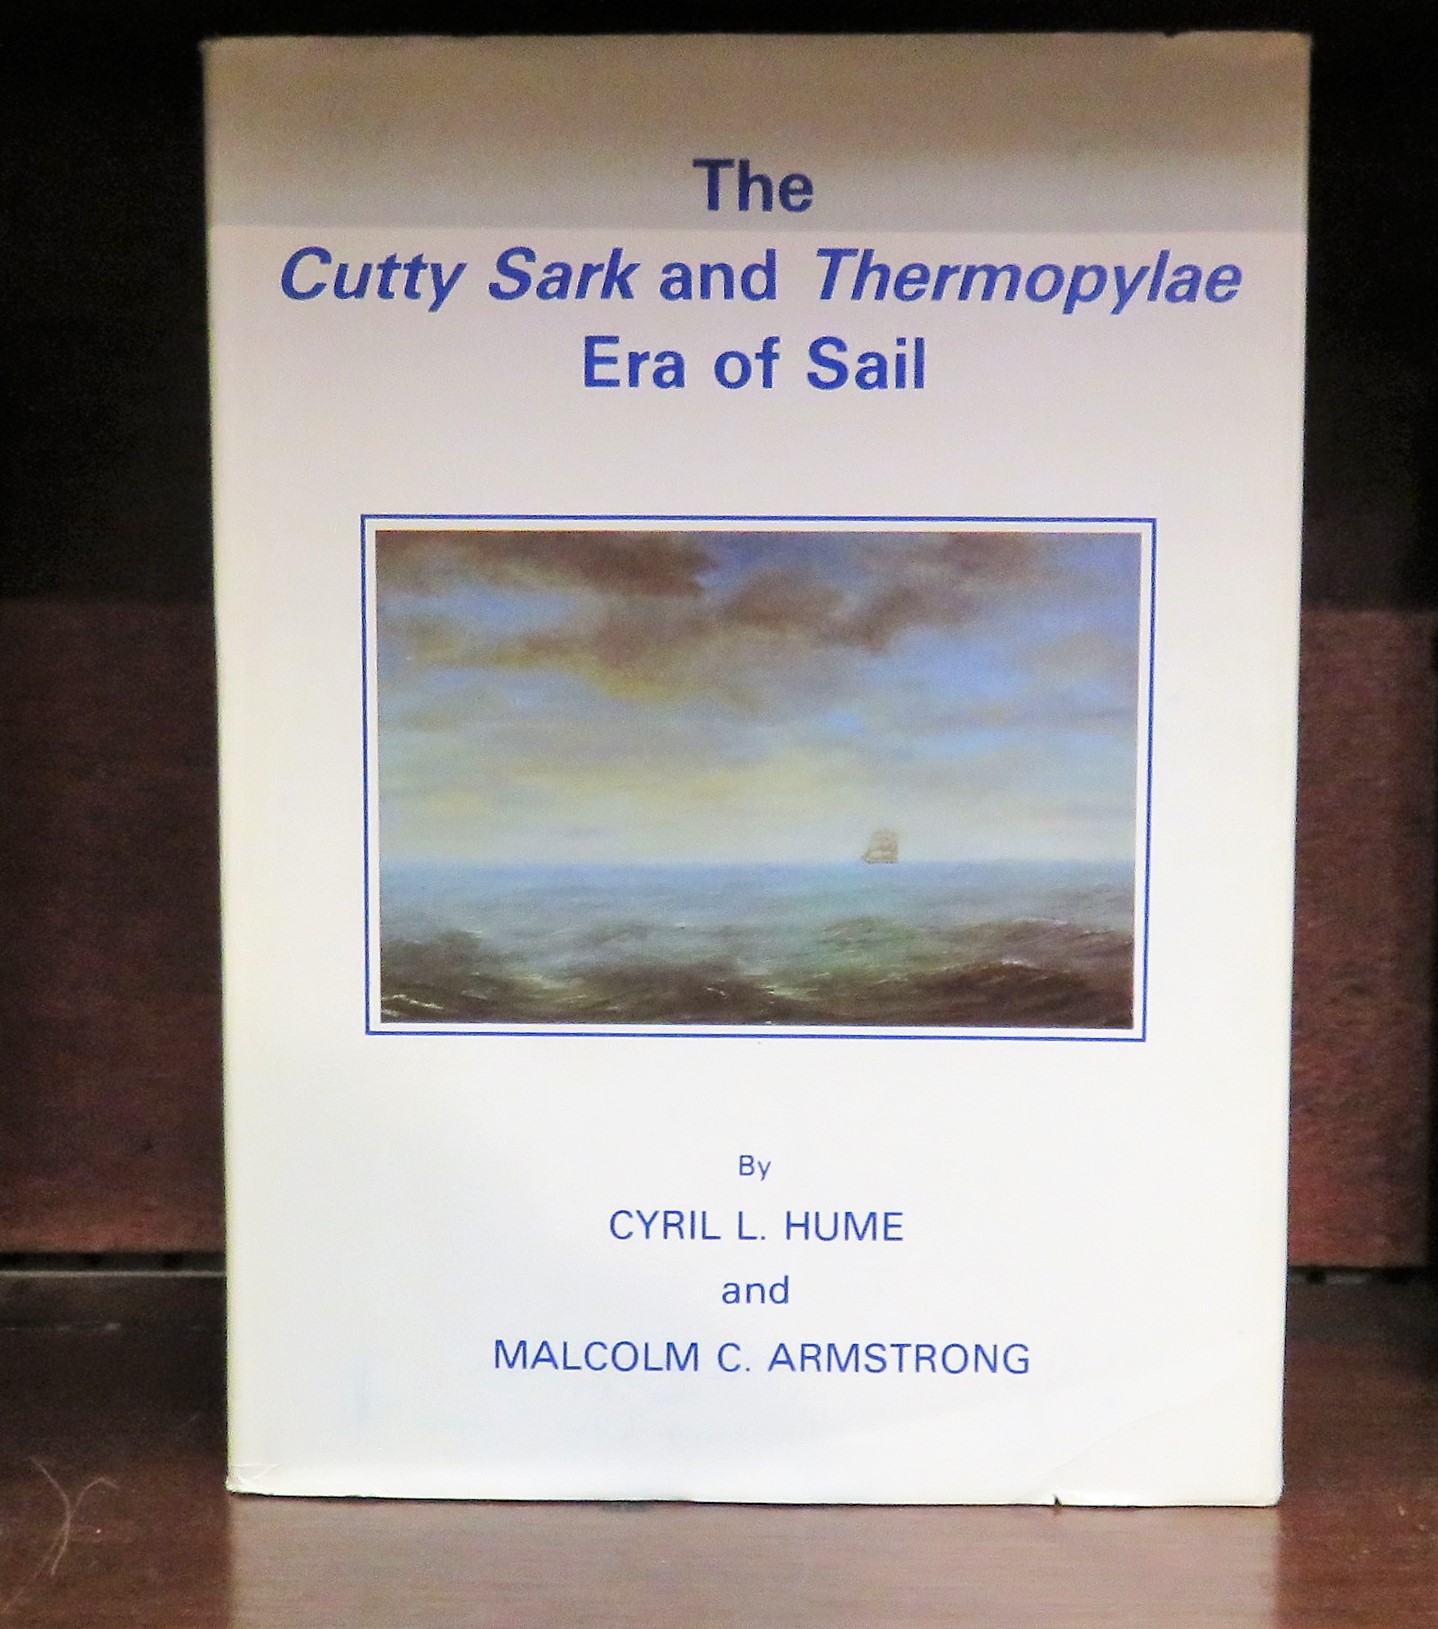 The Cutty Sark and Thermopylae Era of Sail